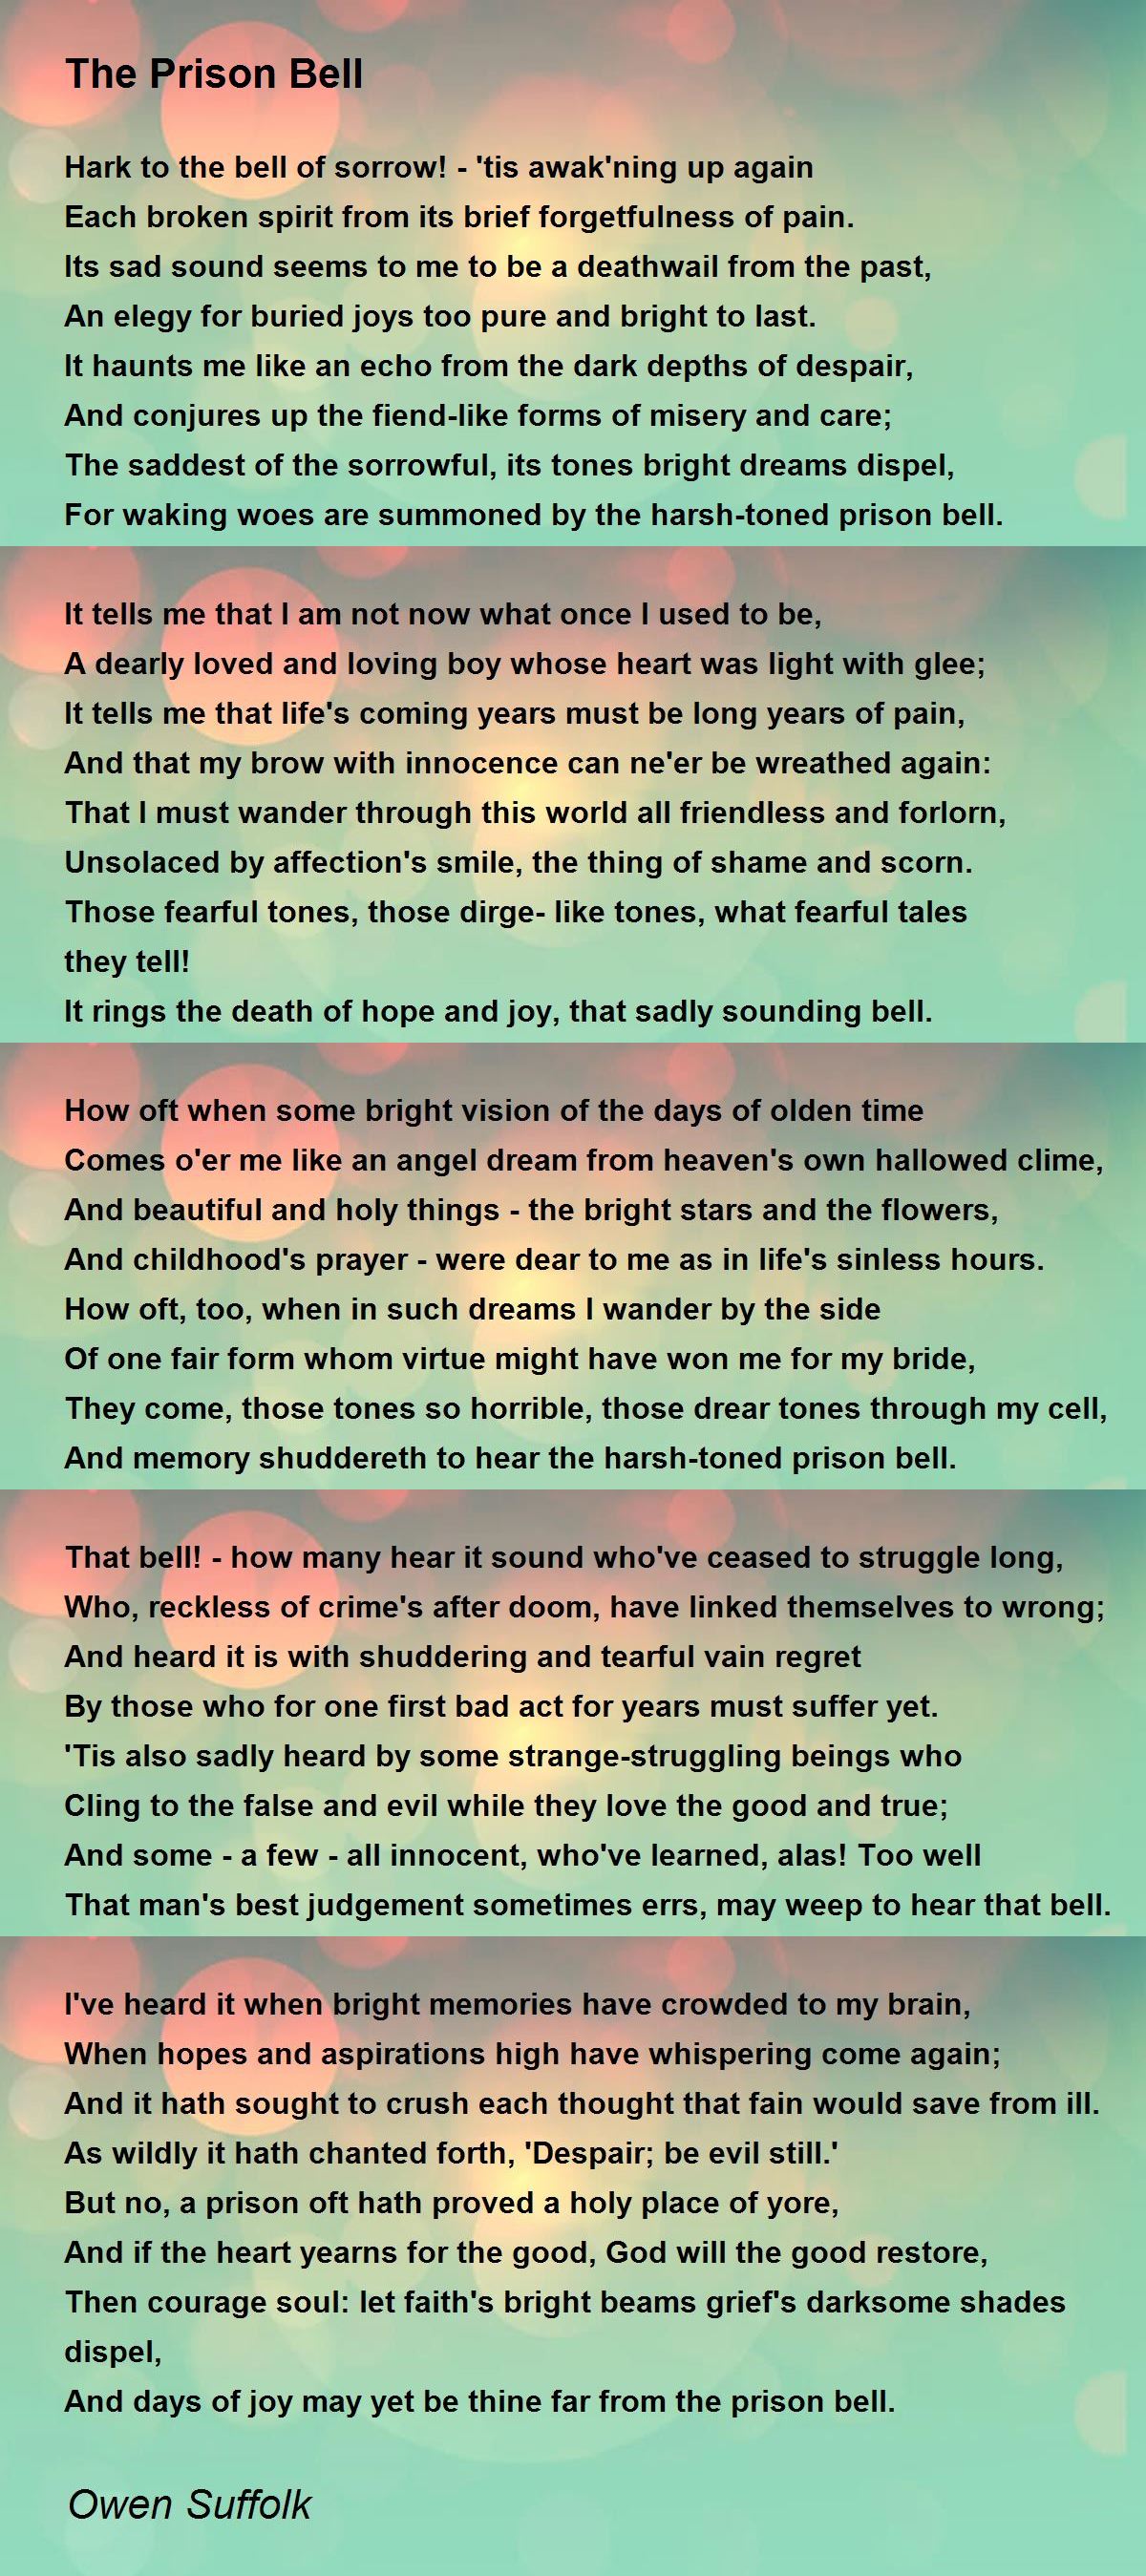 The Prison Bell - The Prison Bell Poem by Owen Suffolk